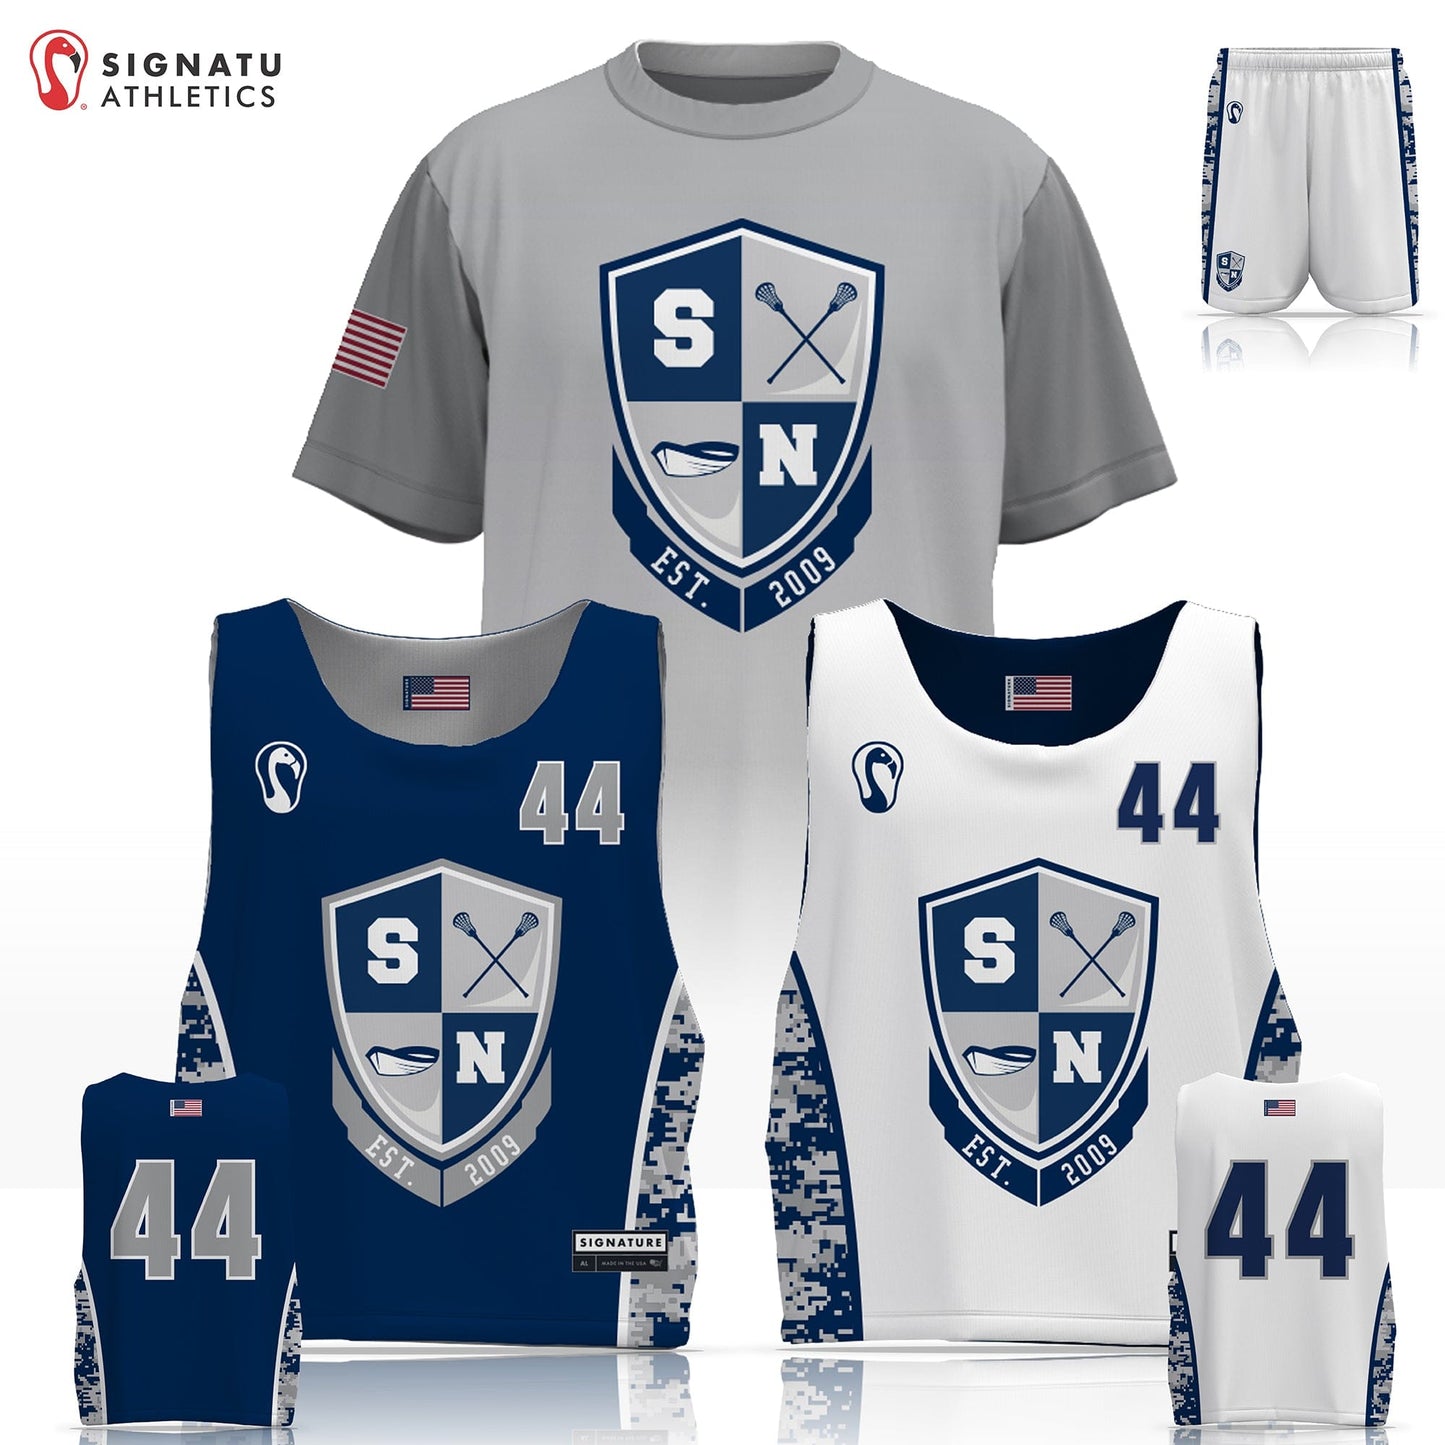 SNYL Team Swag Store Men's 3 Piece Uniform Set:Boys U9 Signature Lacrosse